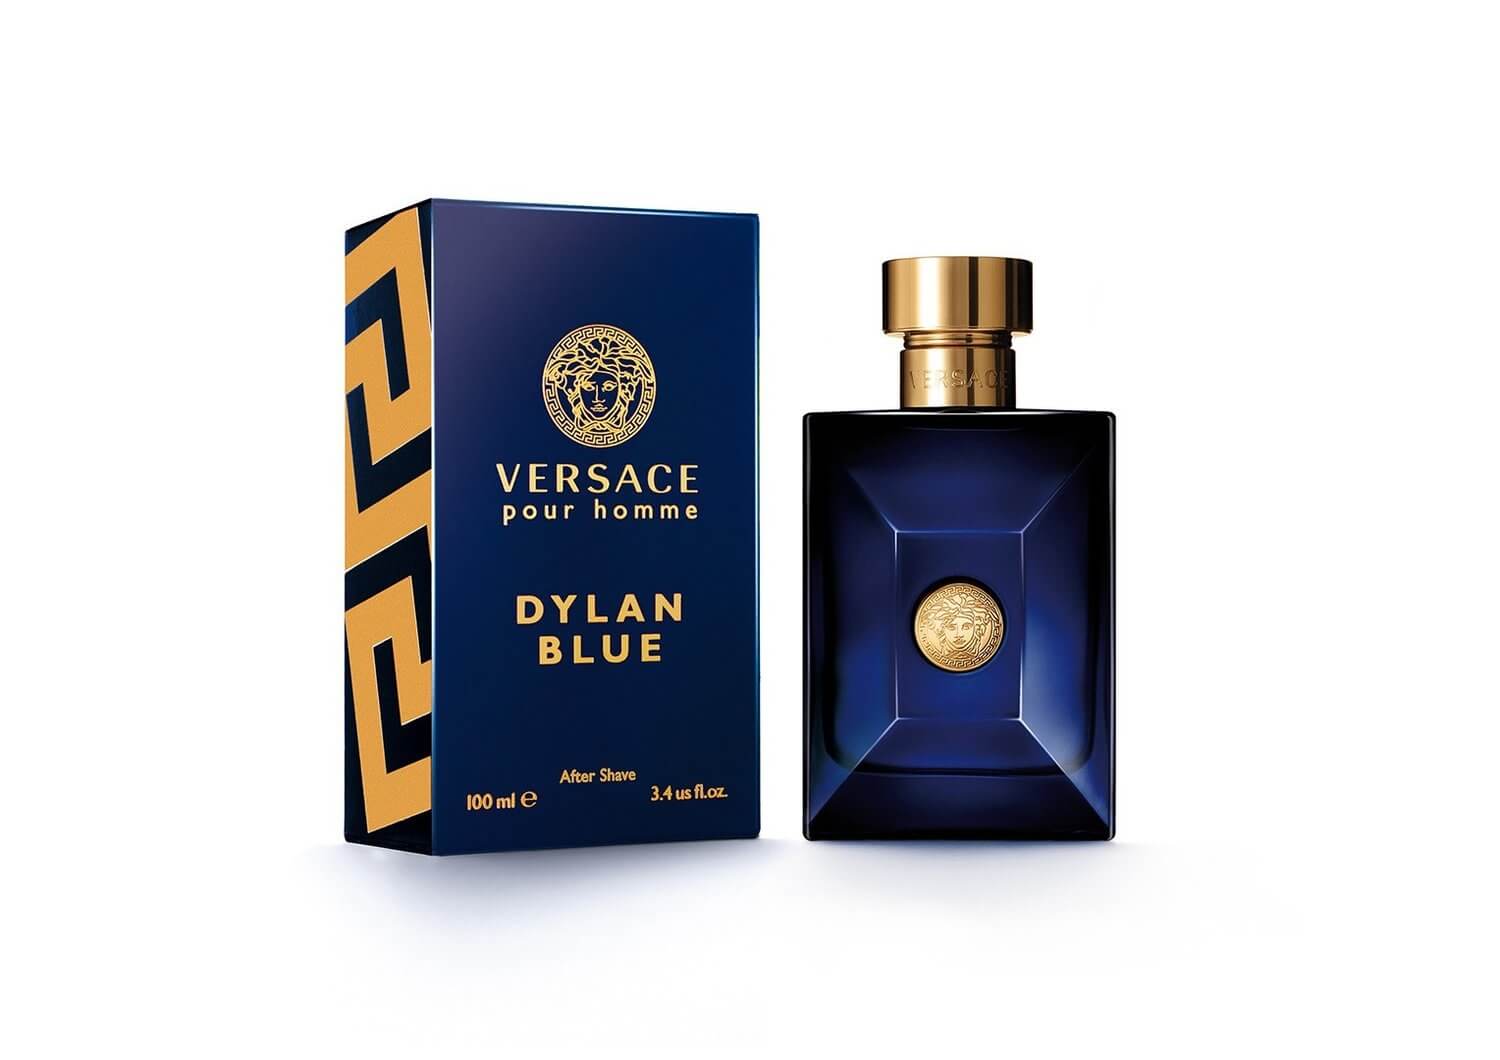 Versace Versace Pour Homme Dylan Blue - voda po holení 100 ml + 2 mesiace na vrátenie tovaru